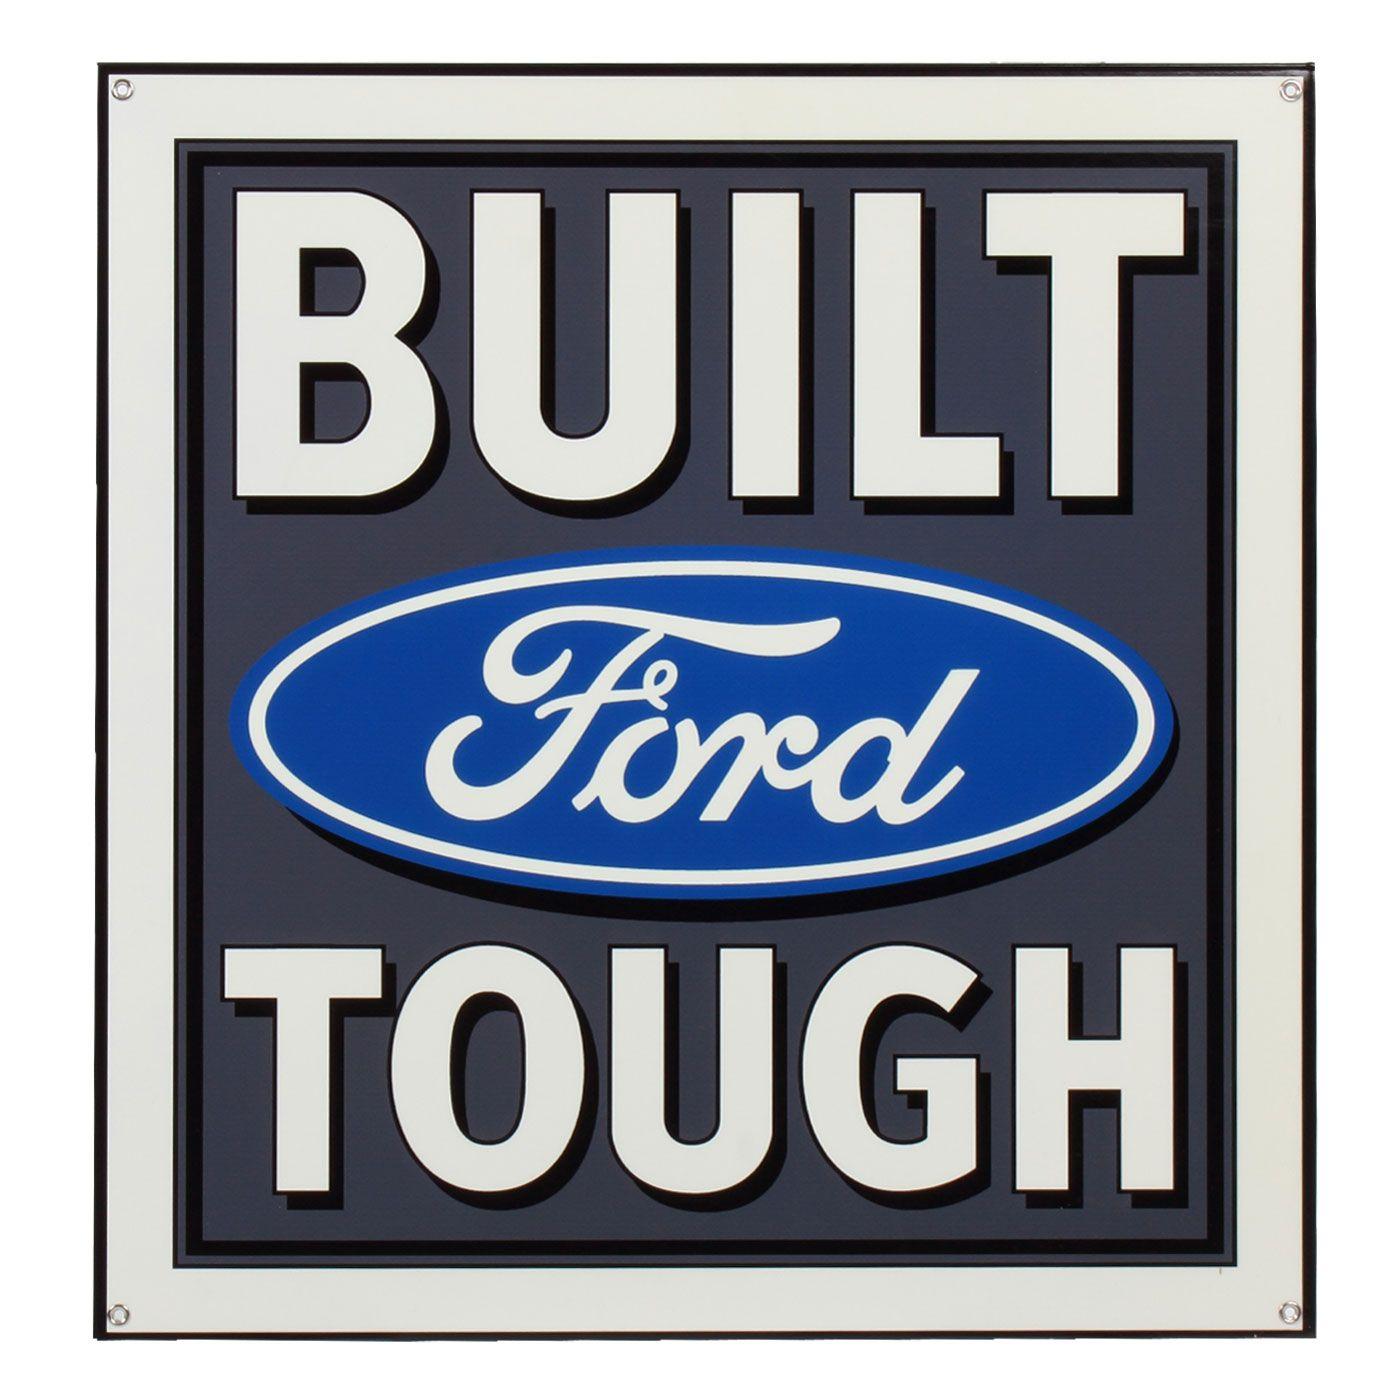 Camo Ford Tough Logo - Built Ford Tough Wallpaper - image #110